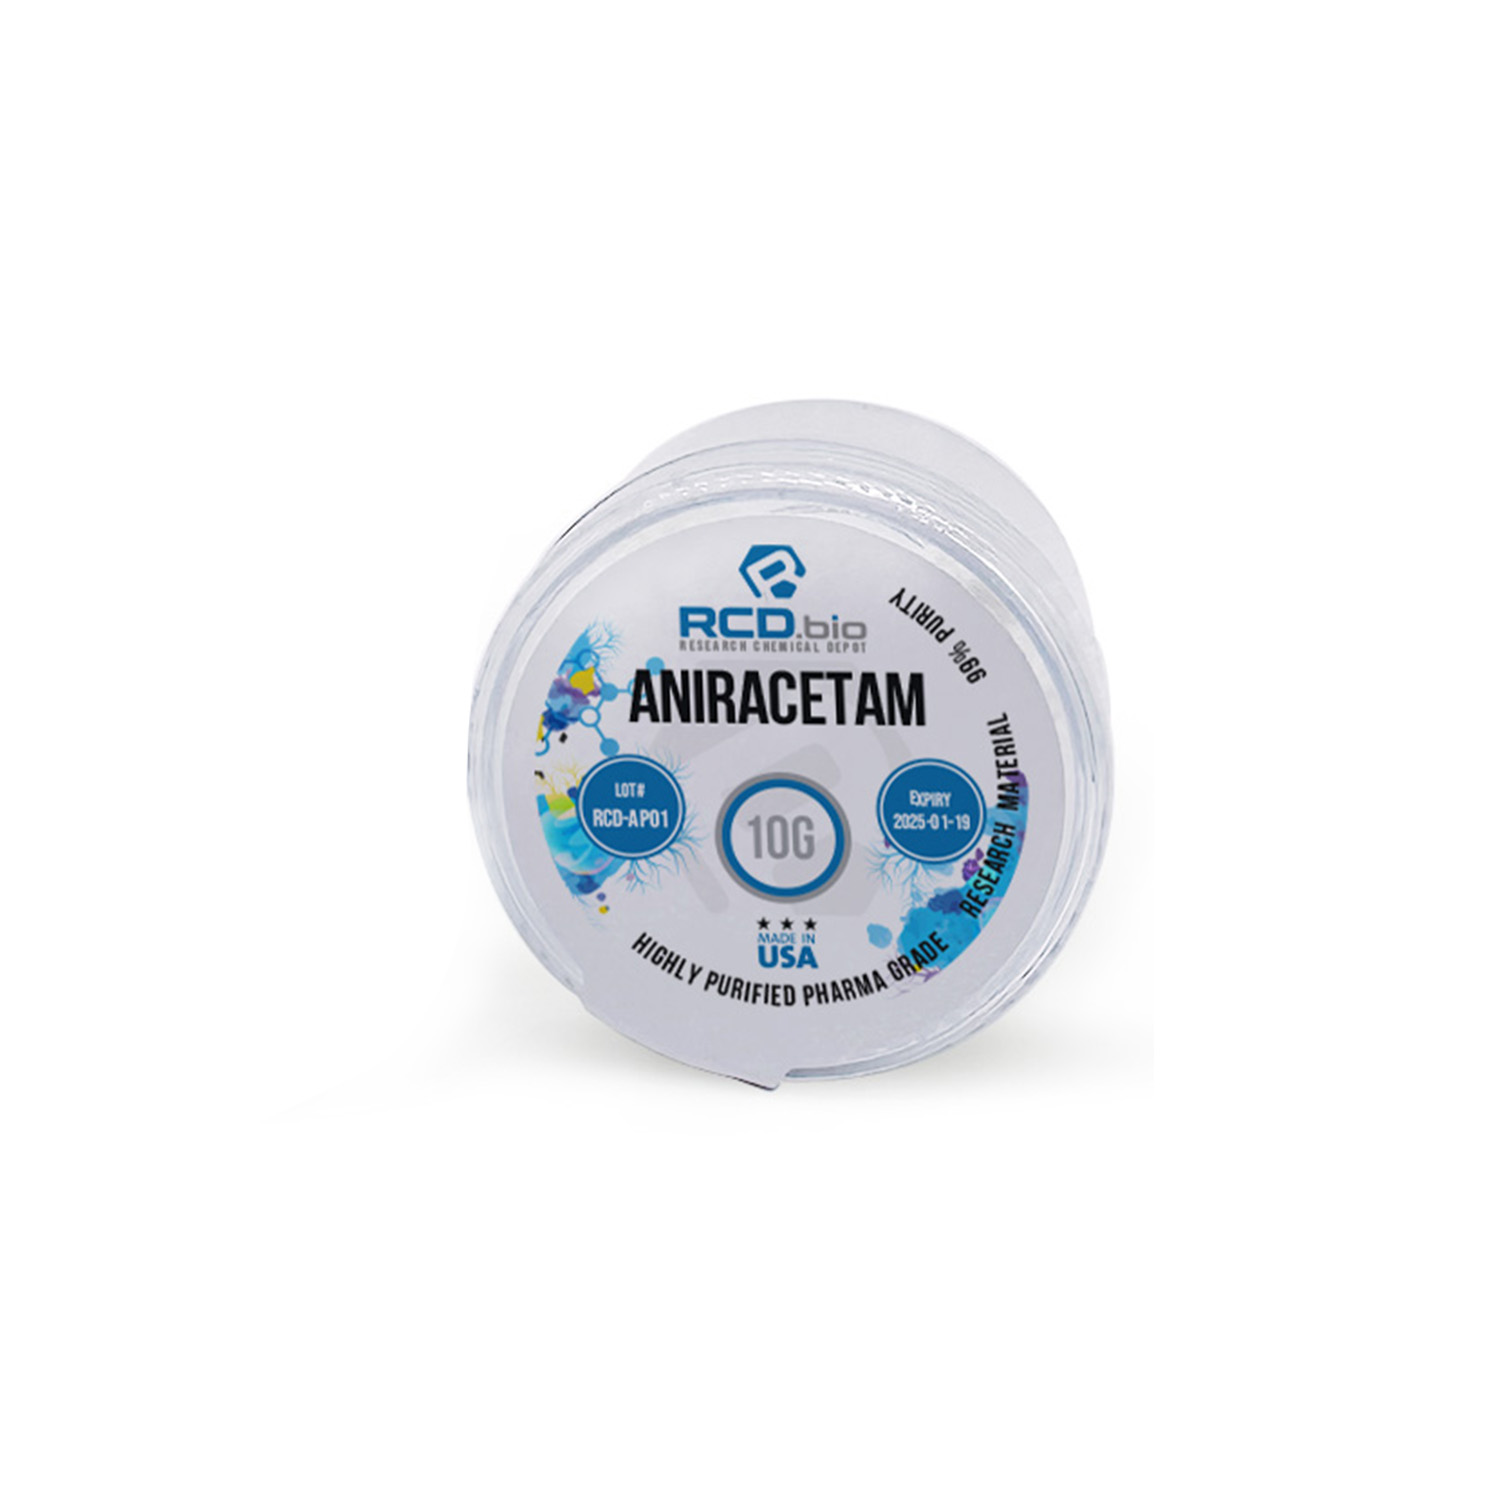 Aniracetam Powder For Sale | Fast Shipping | RCD.bio